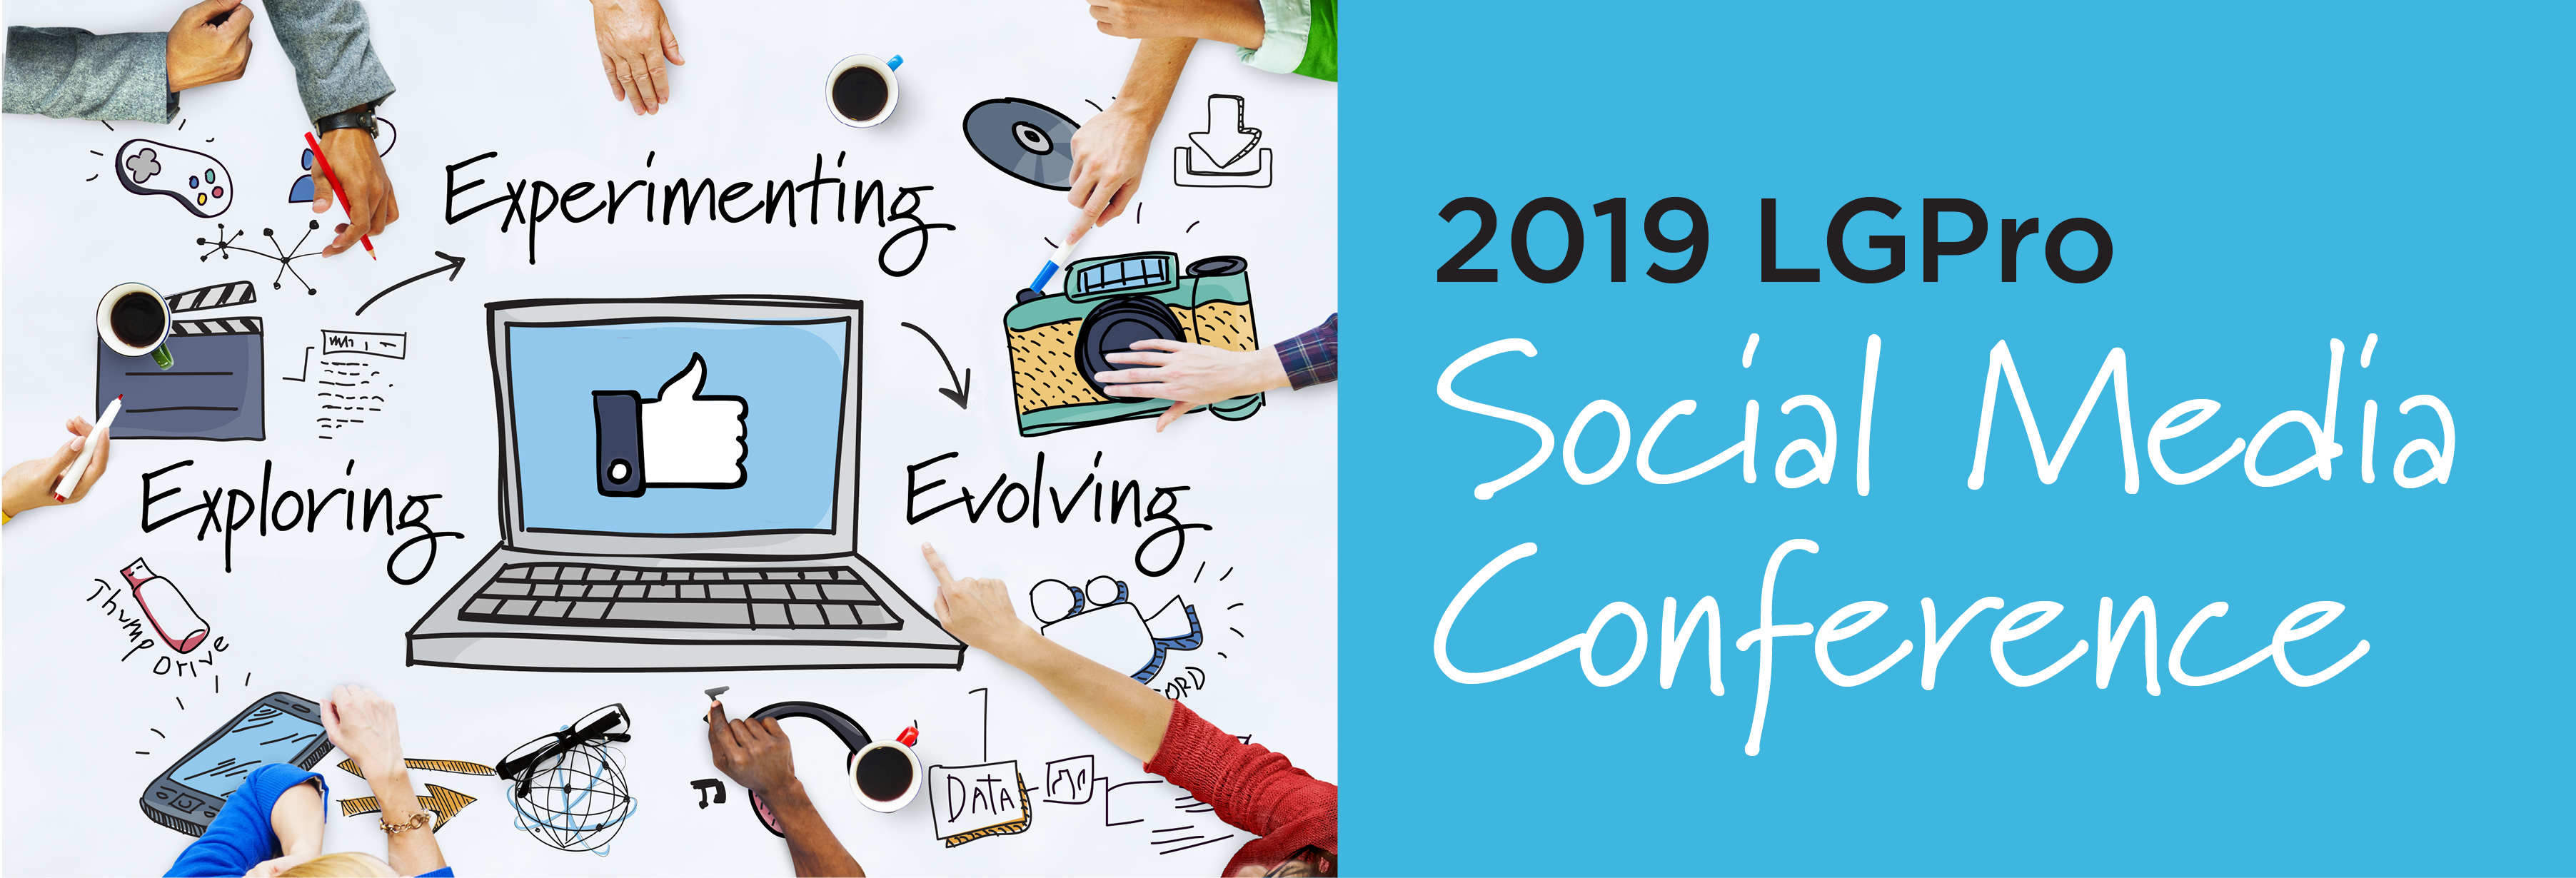 Social Media Conference - 2019